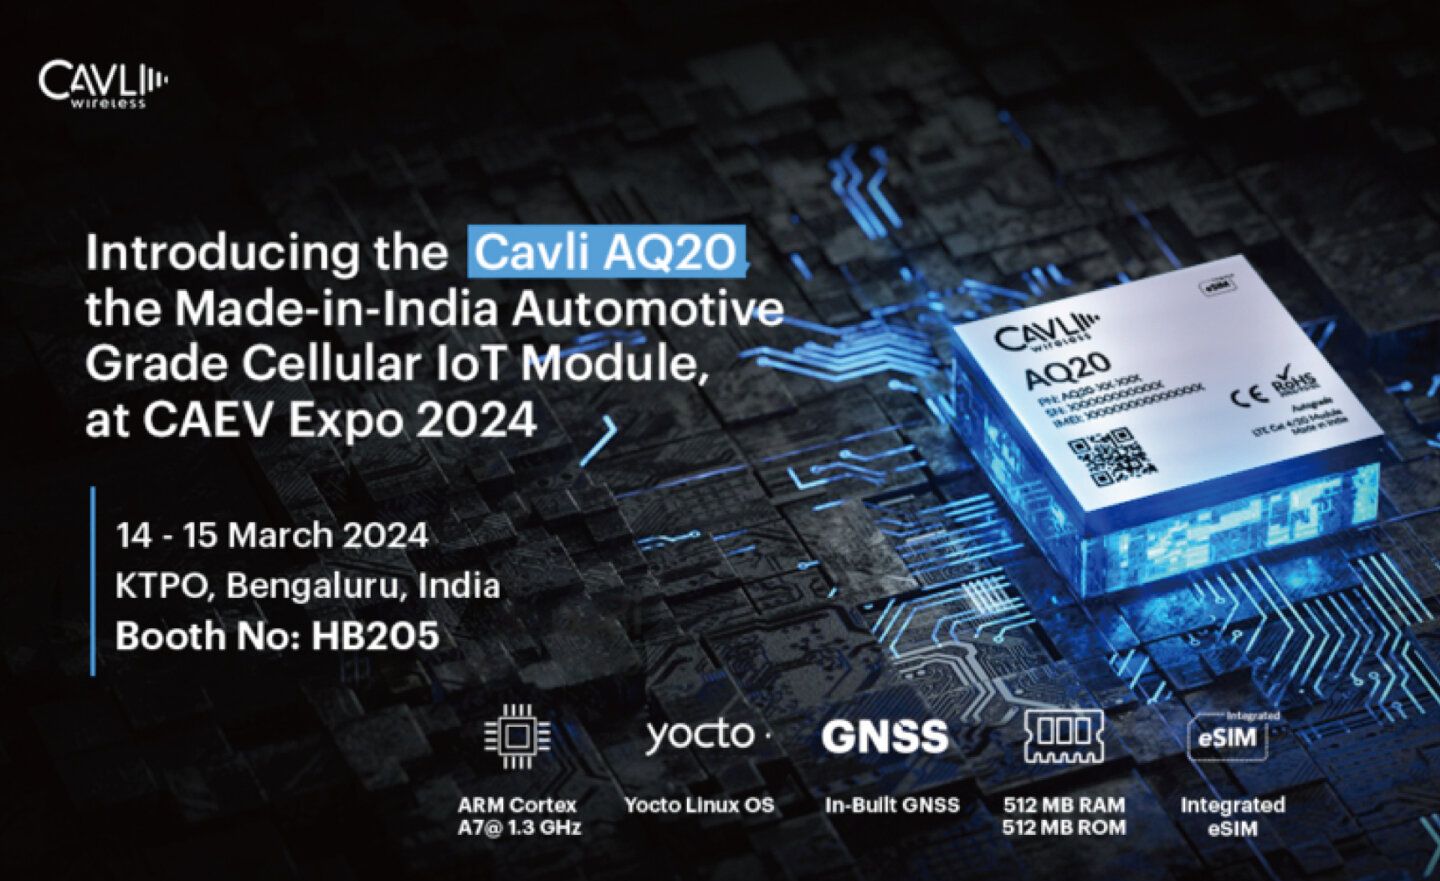 Cavli Wireless將在CAEV Expo 2024上推出首款印度製造的汽車級LTE Cat 4智慧物聯網模組AQ20